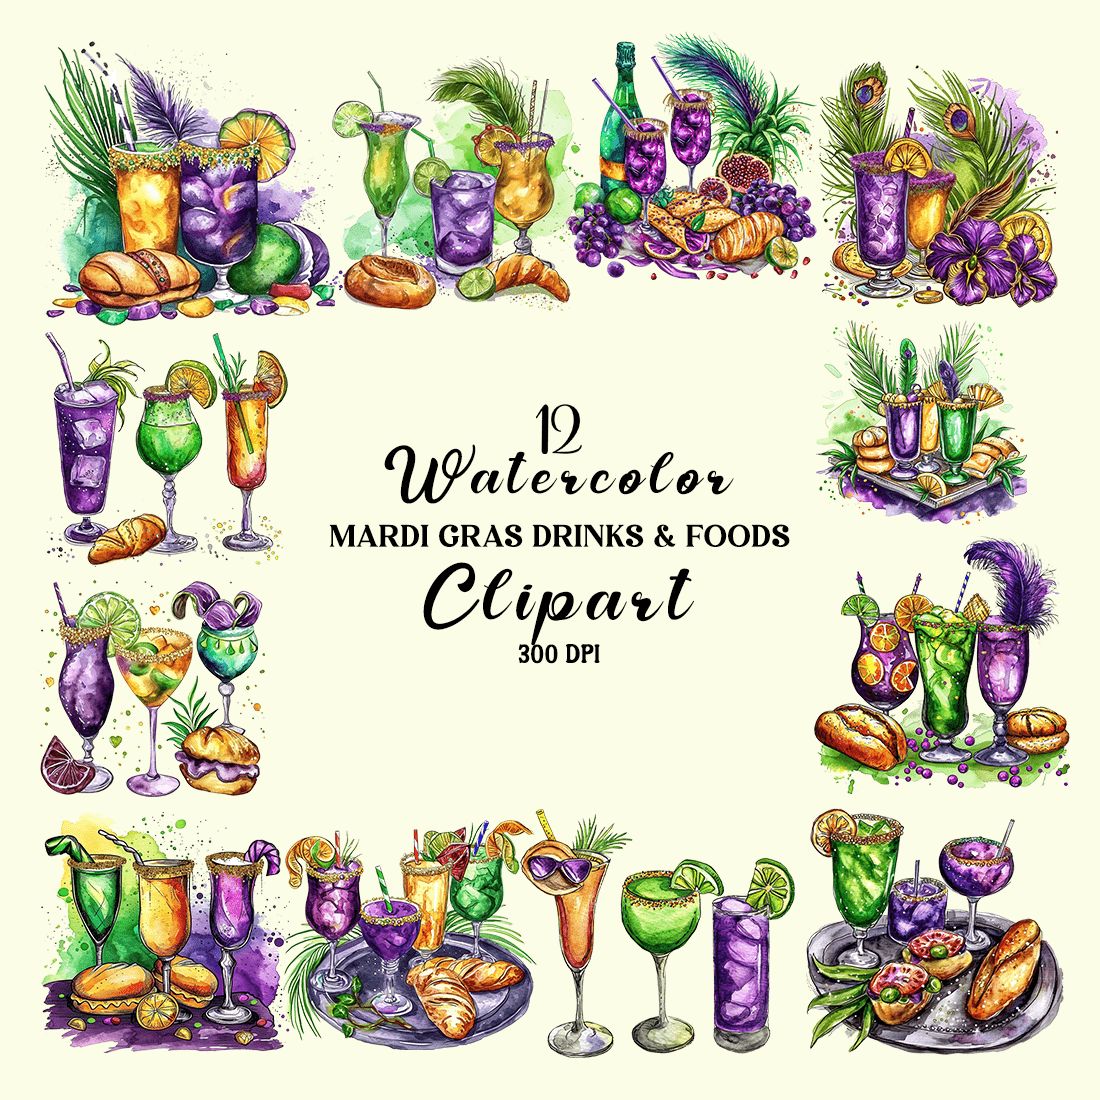 Watercolor Mardi Gras Drinks & Foods Clipart Bundle cover image.